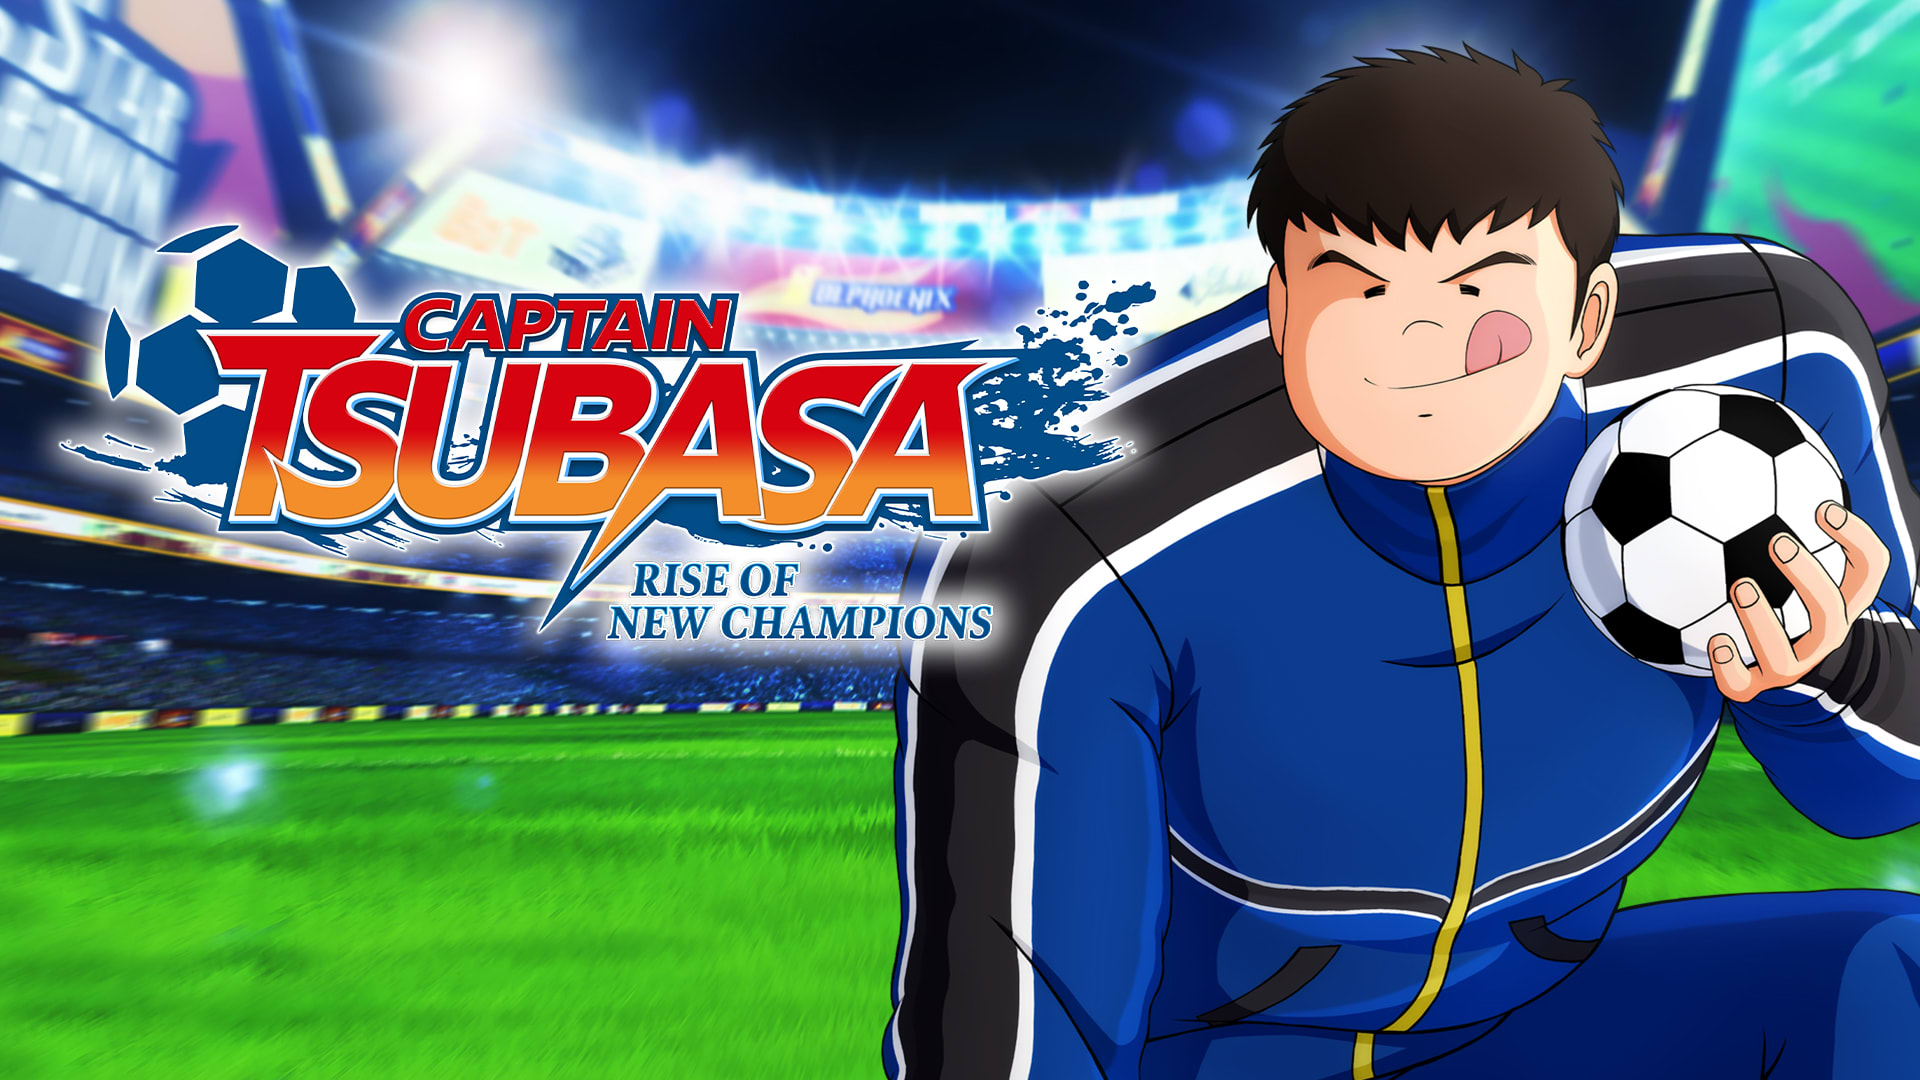 Captain Tsubasa: Rise of New Champions: Taichi Nakanishi